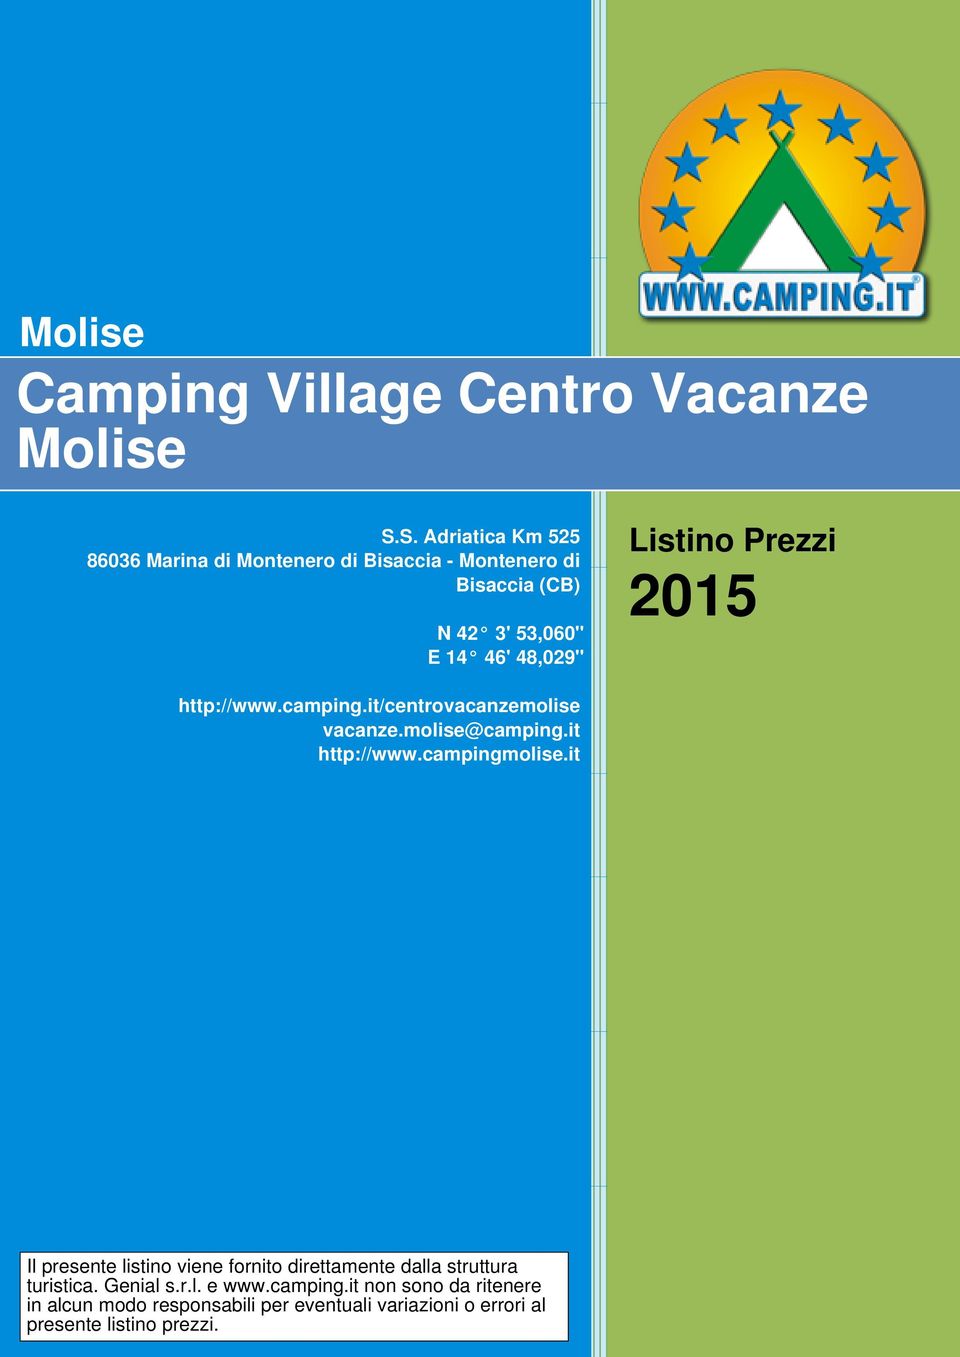 Listino Prezzi 2015 http://www.camping.it/centrovacanzemolise vacanze.molise@camping.it http://www.campingmolise.